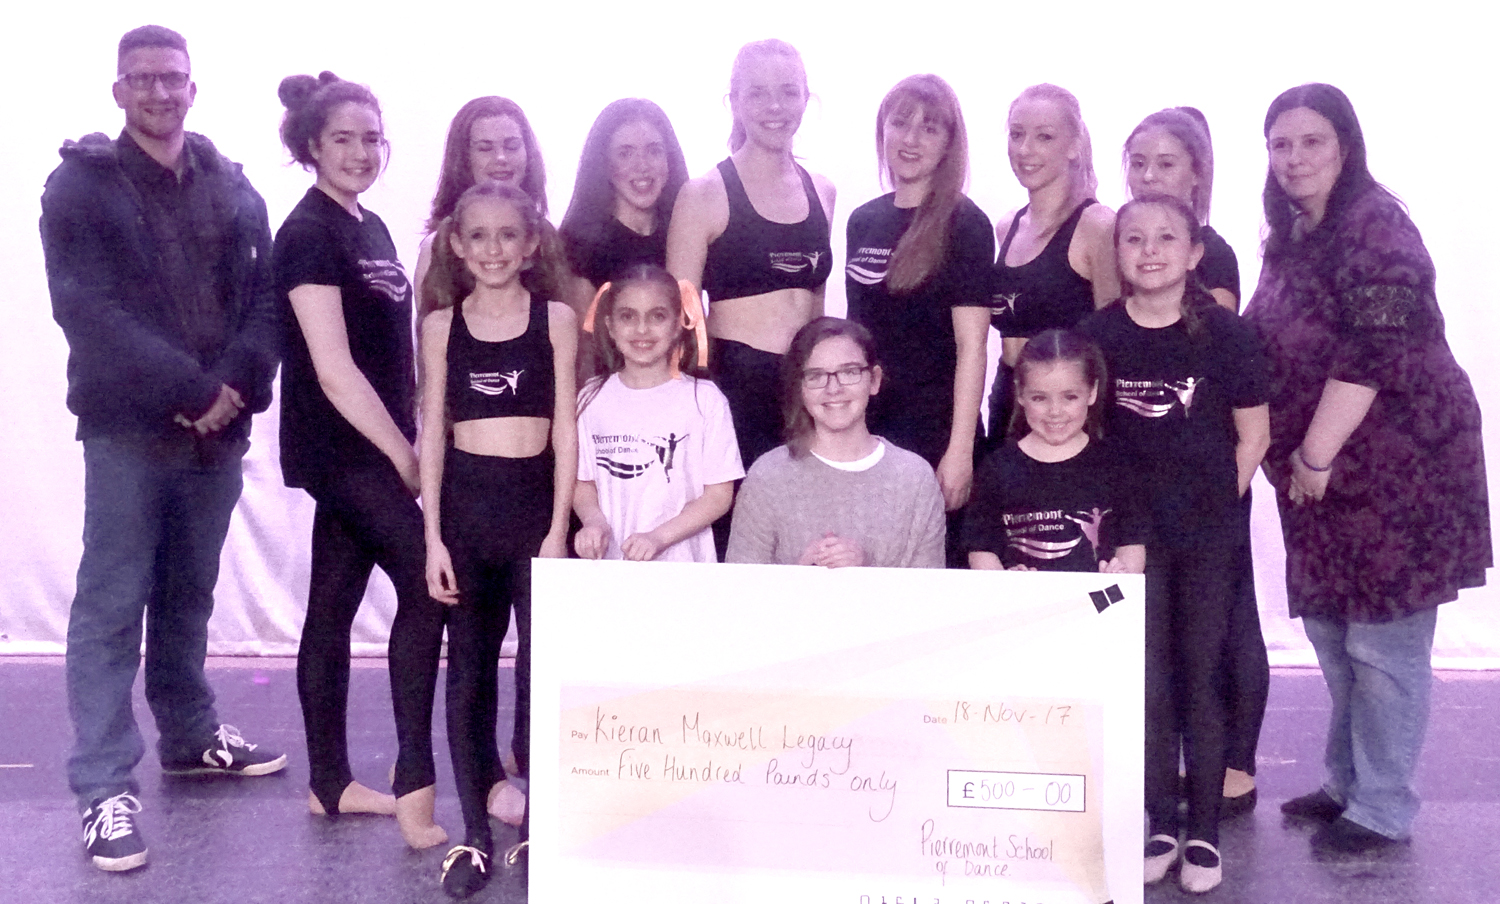 Dancers Raise £500 Towards the Kieran Maxwell Legacy